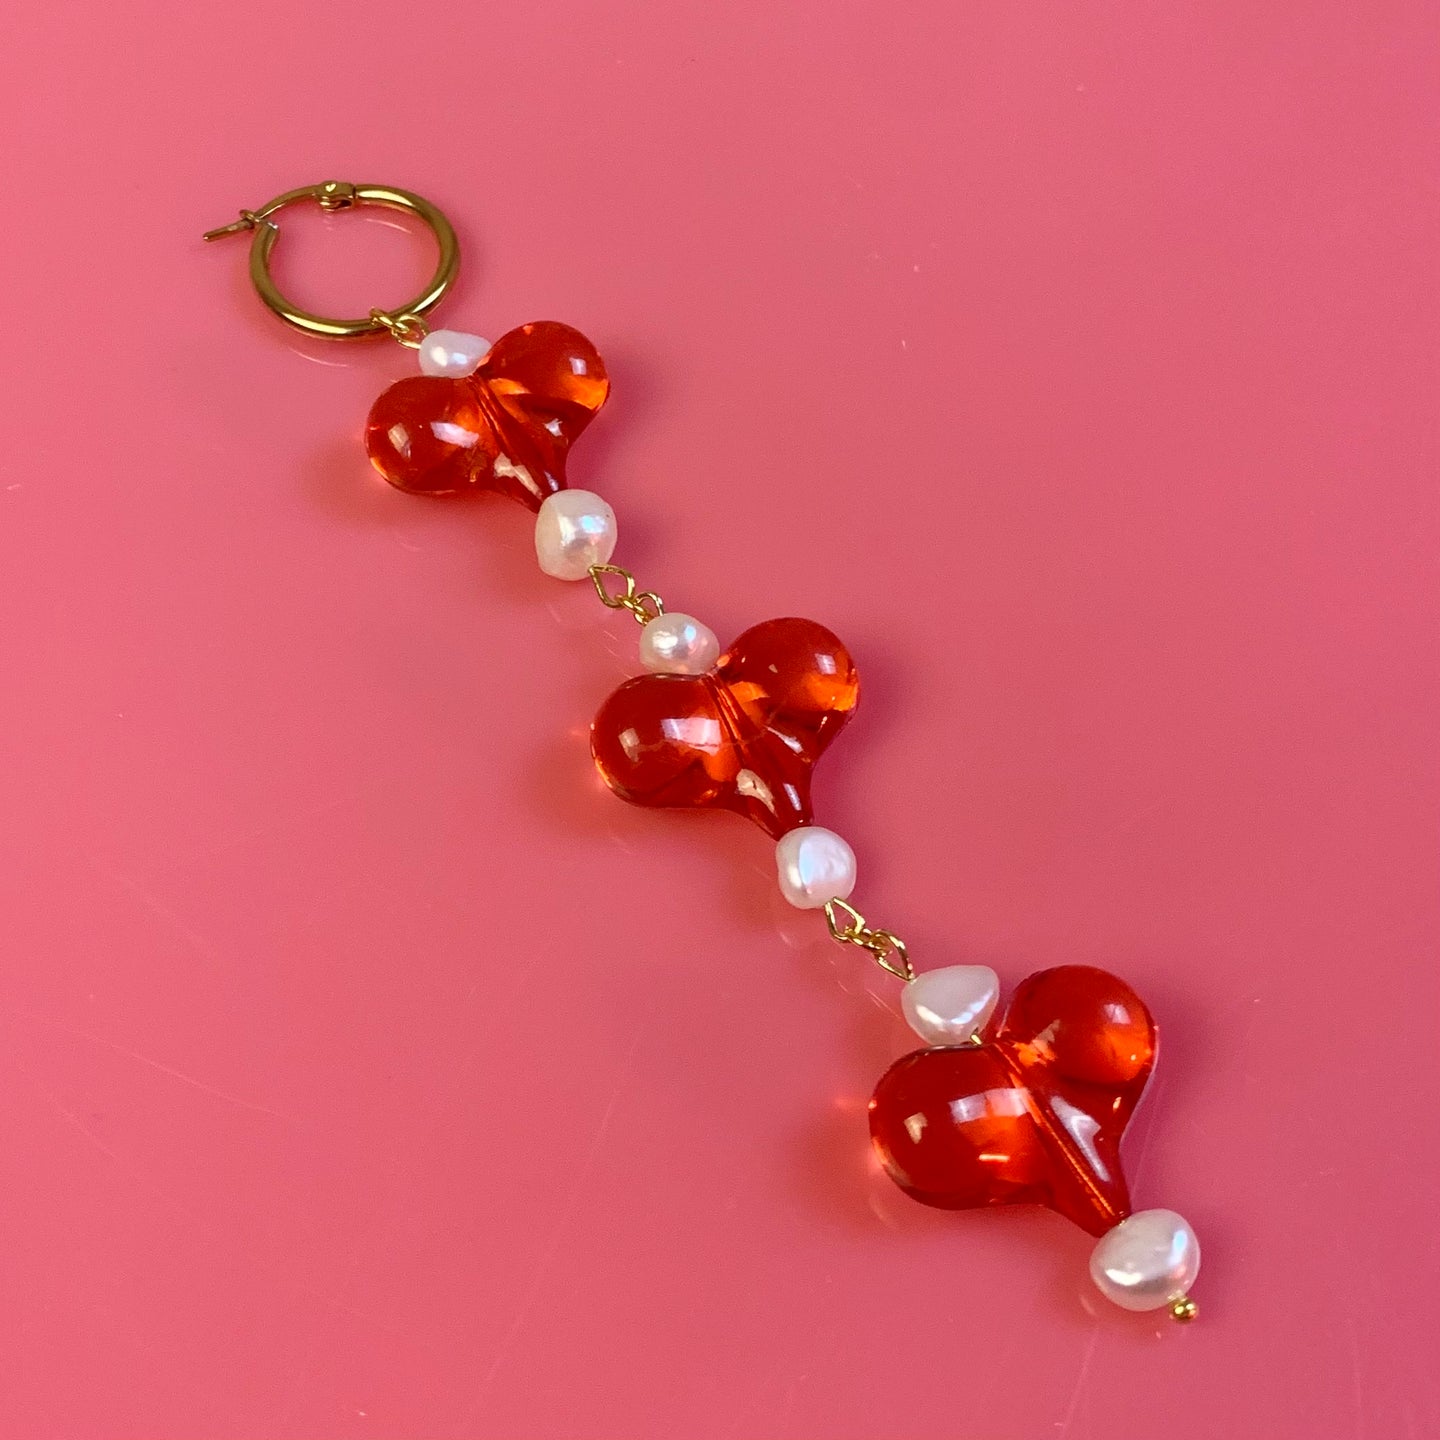 Assorted single hearts earring